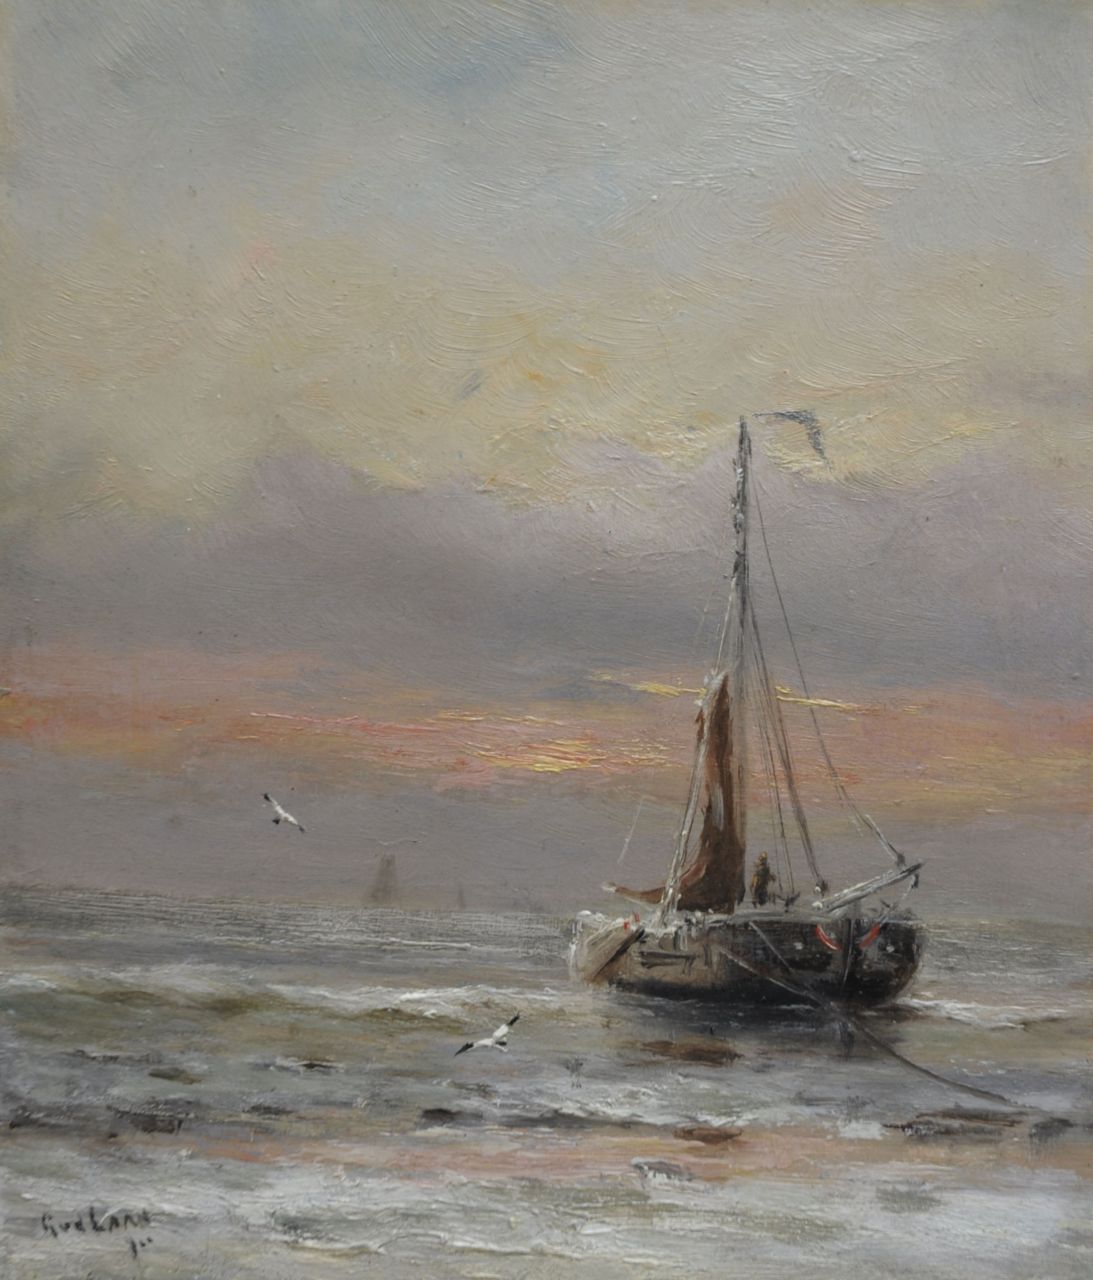 Laan G. van der | Gerard van der Laan,  Winter at the beach, oil on painter's board 19.3 x 16.9 cm, signed l.l.